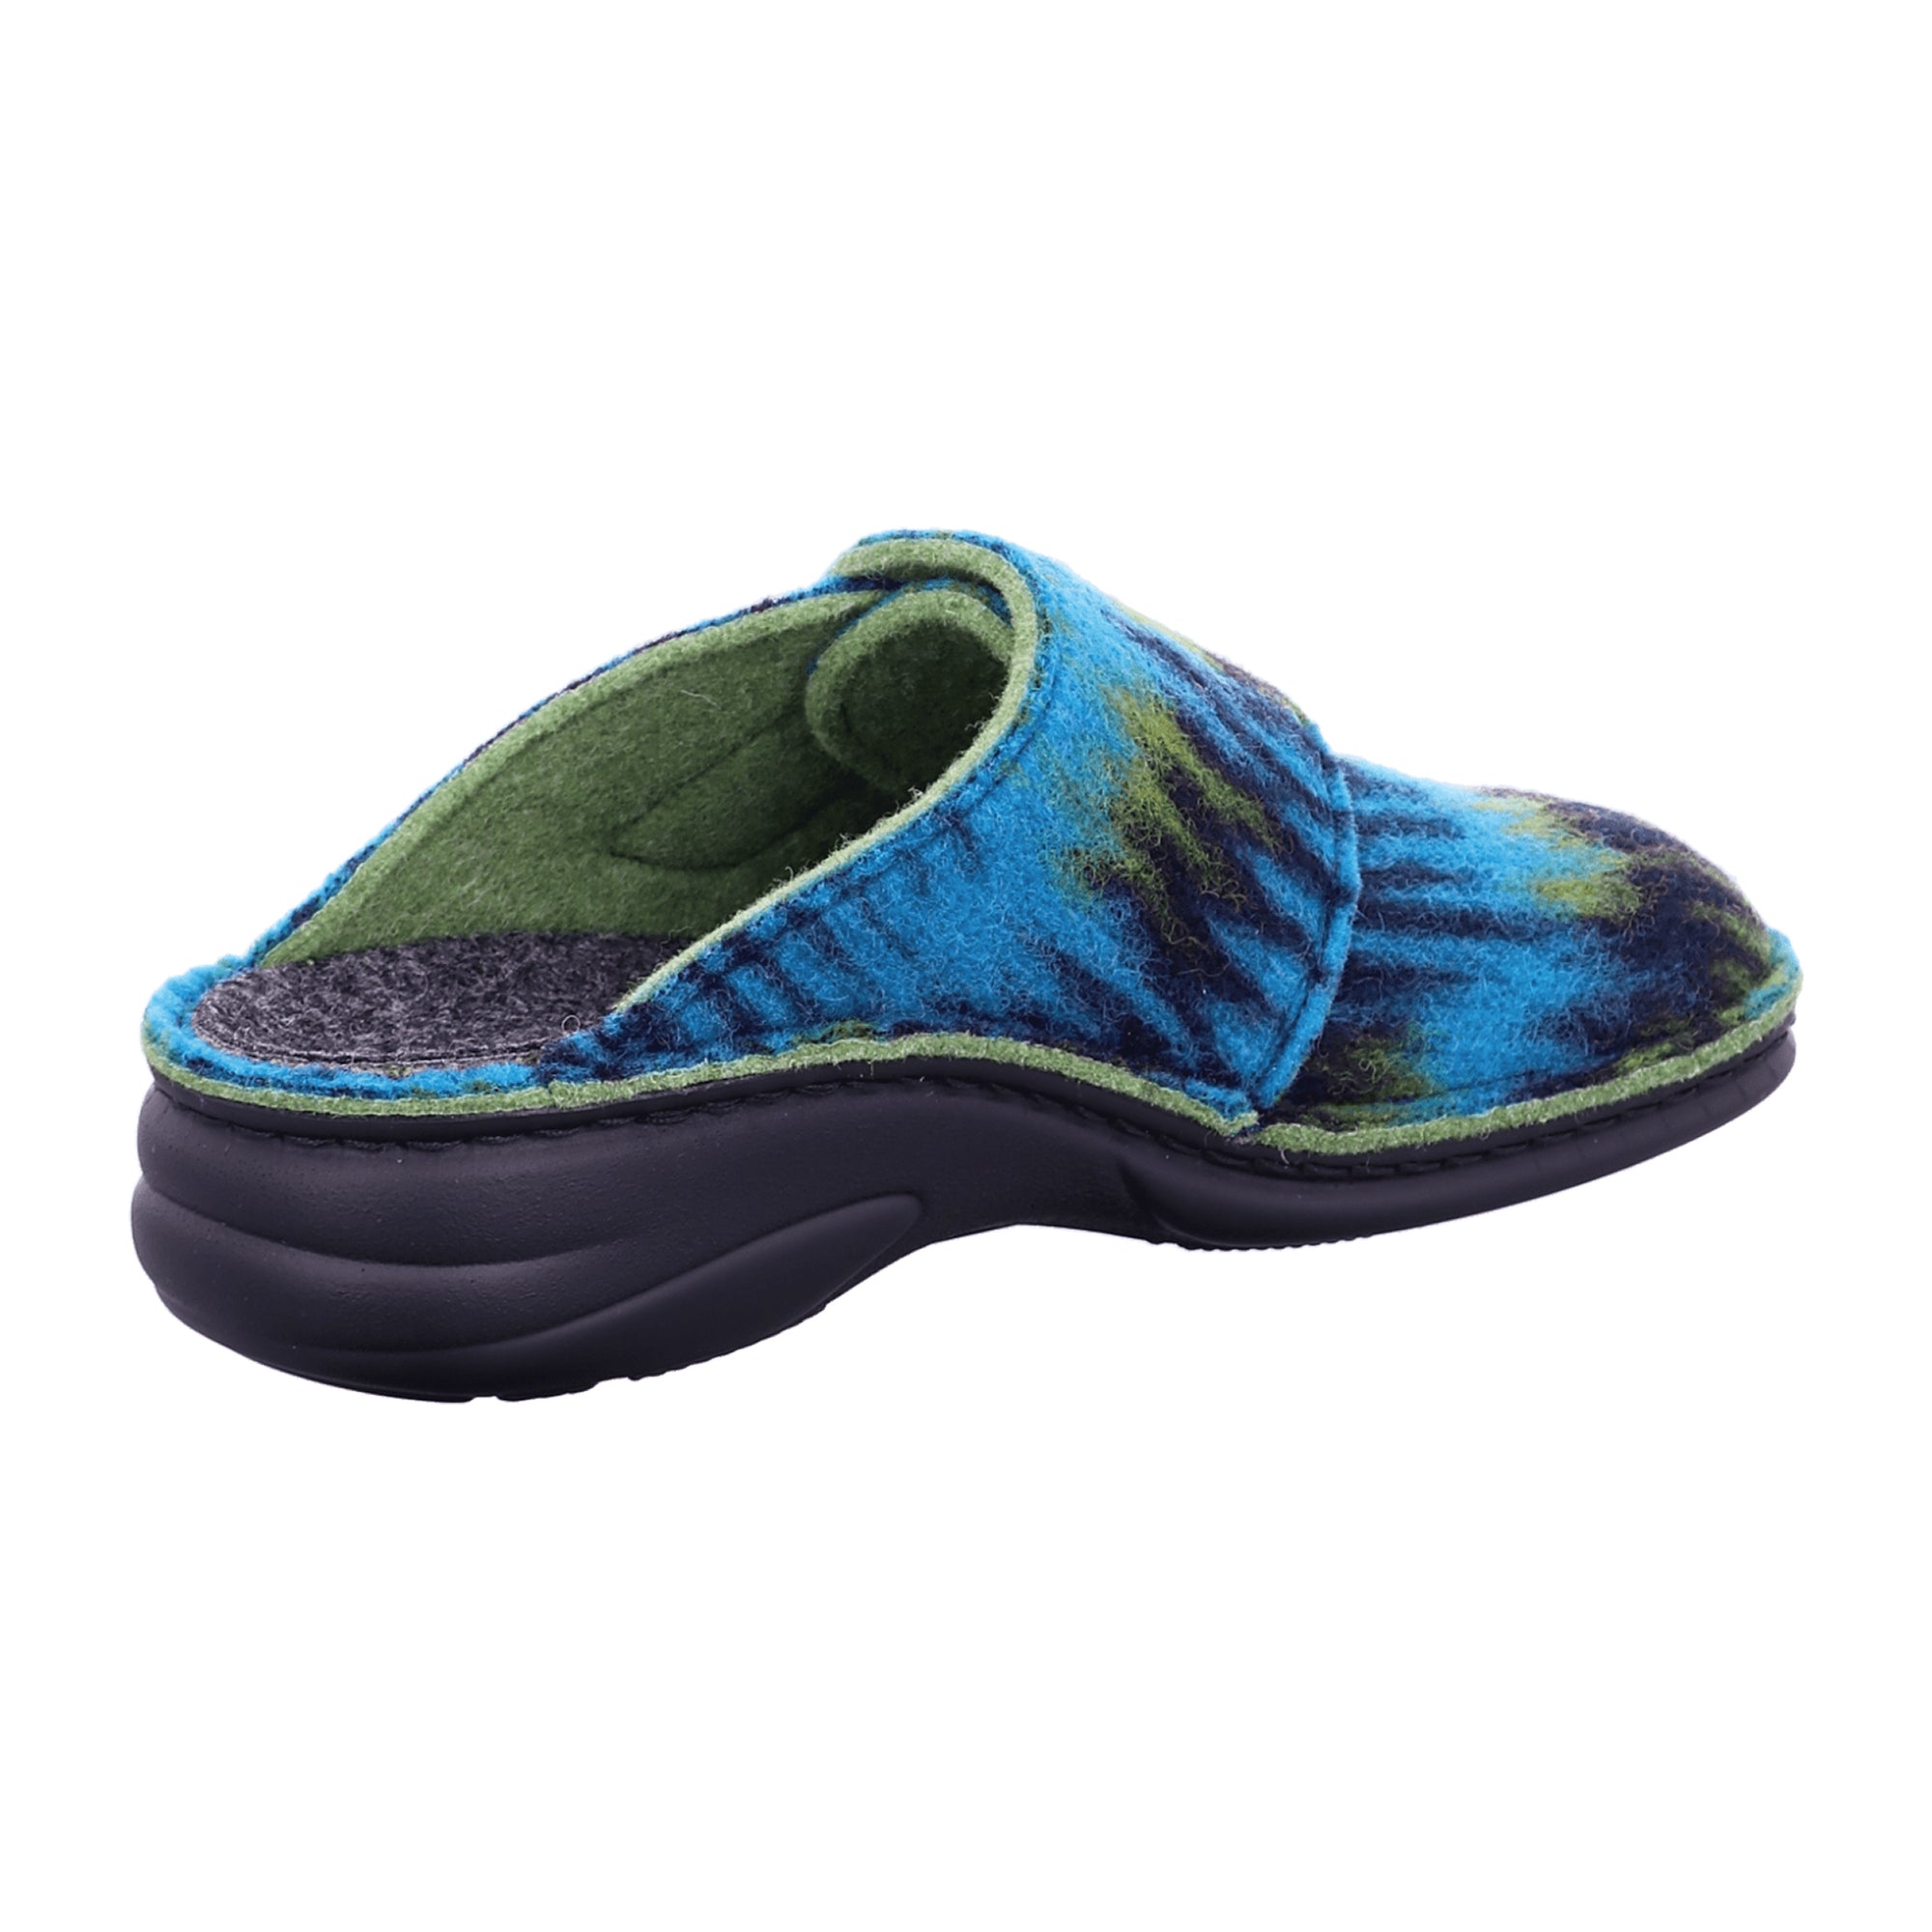 Finn Comfort GOMS Women's Comfort Shoes, Stylish Blue